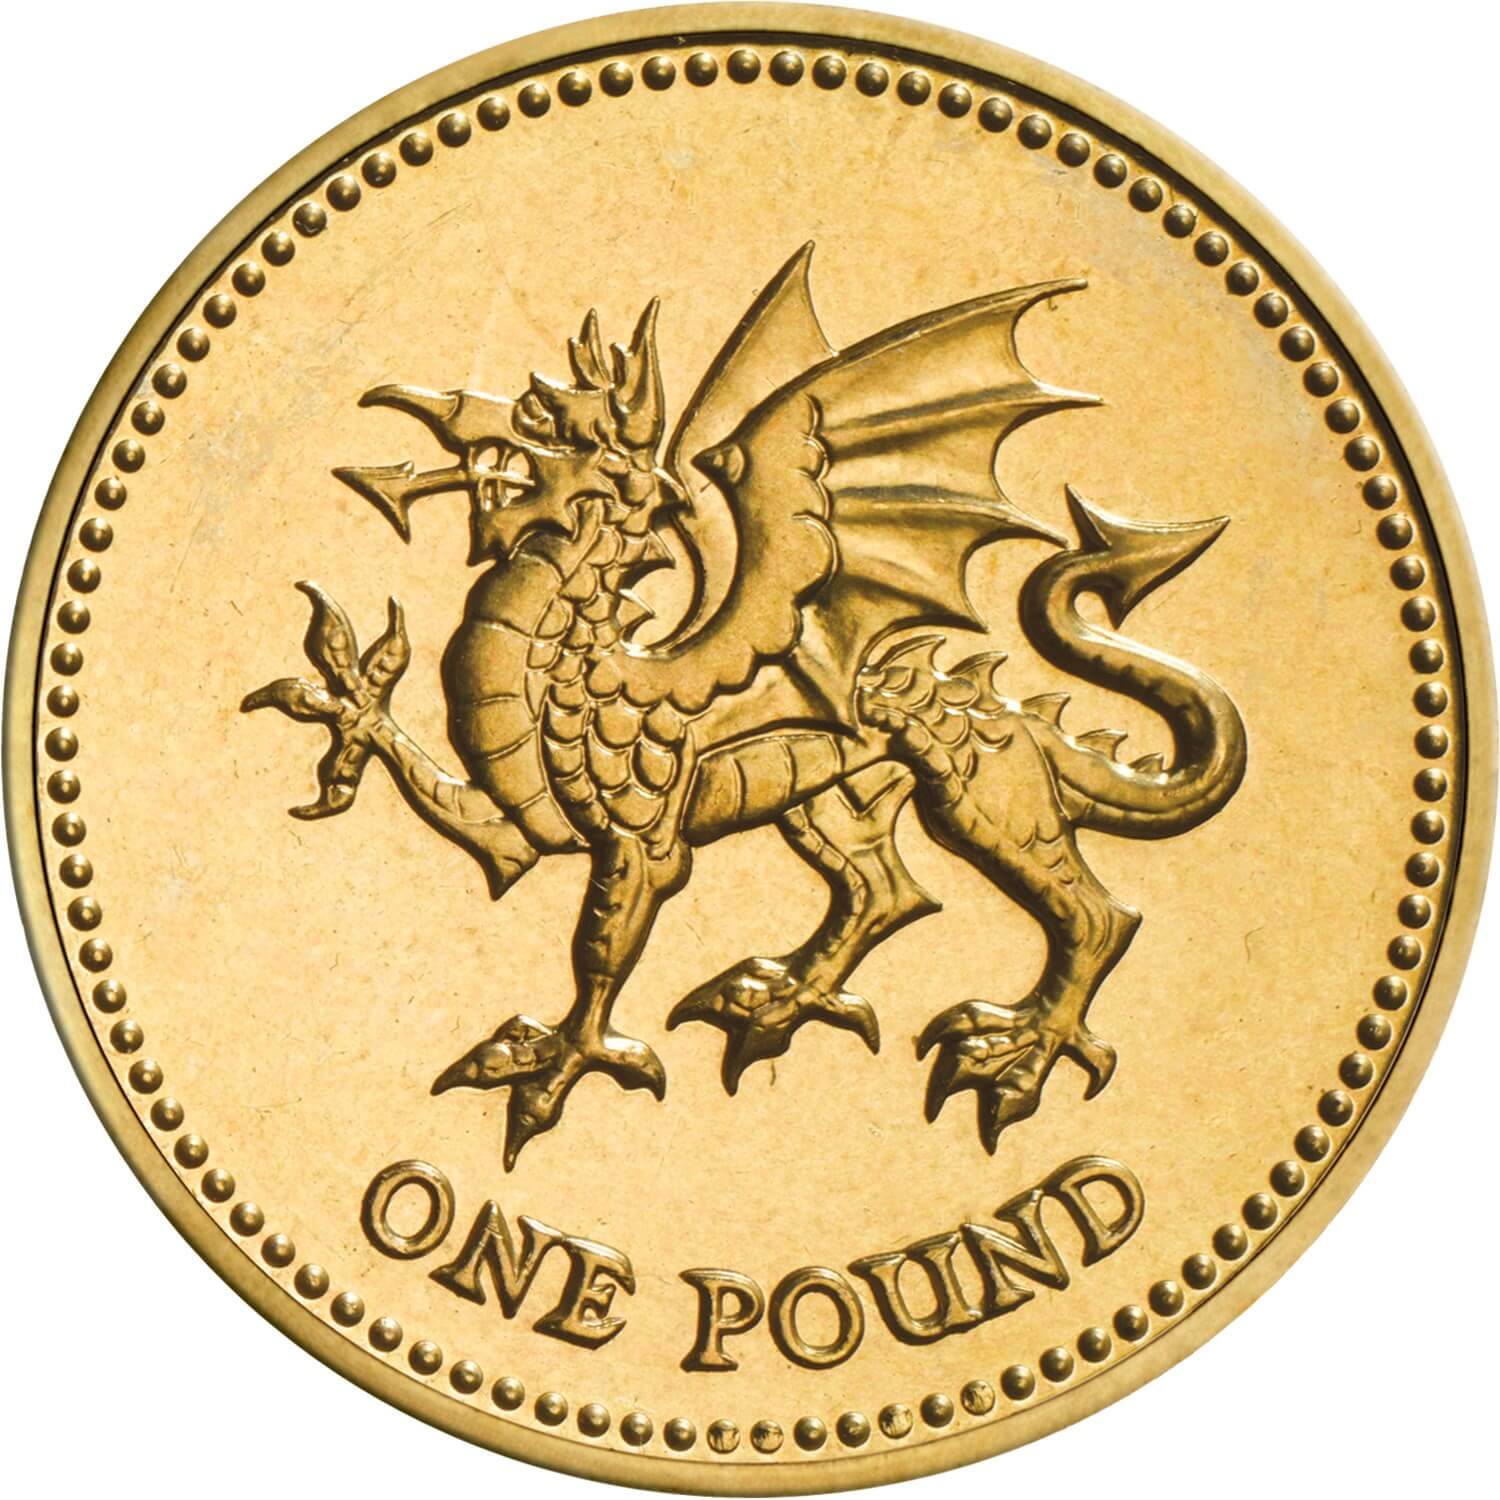 1995_2000_one_pound_rev_coin.jpg